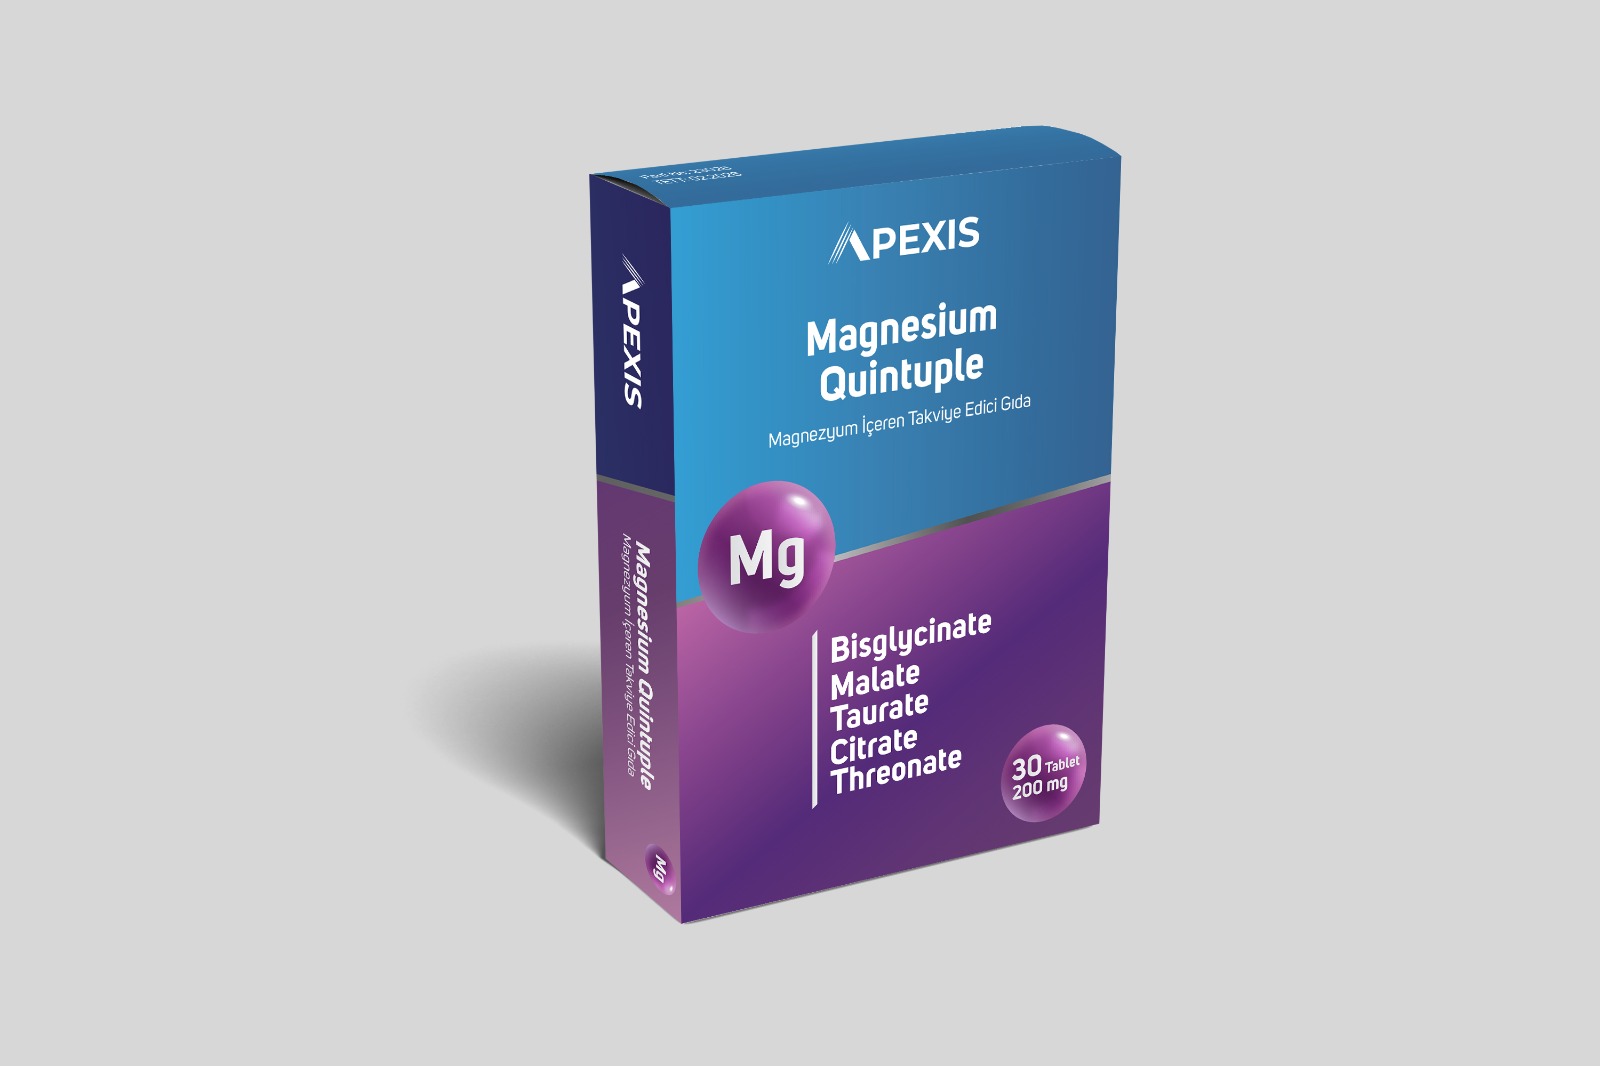 APEXIS MAGNESIUM QUINTUPLE 30 TABLET